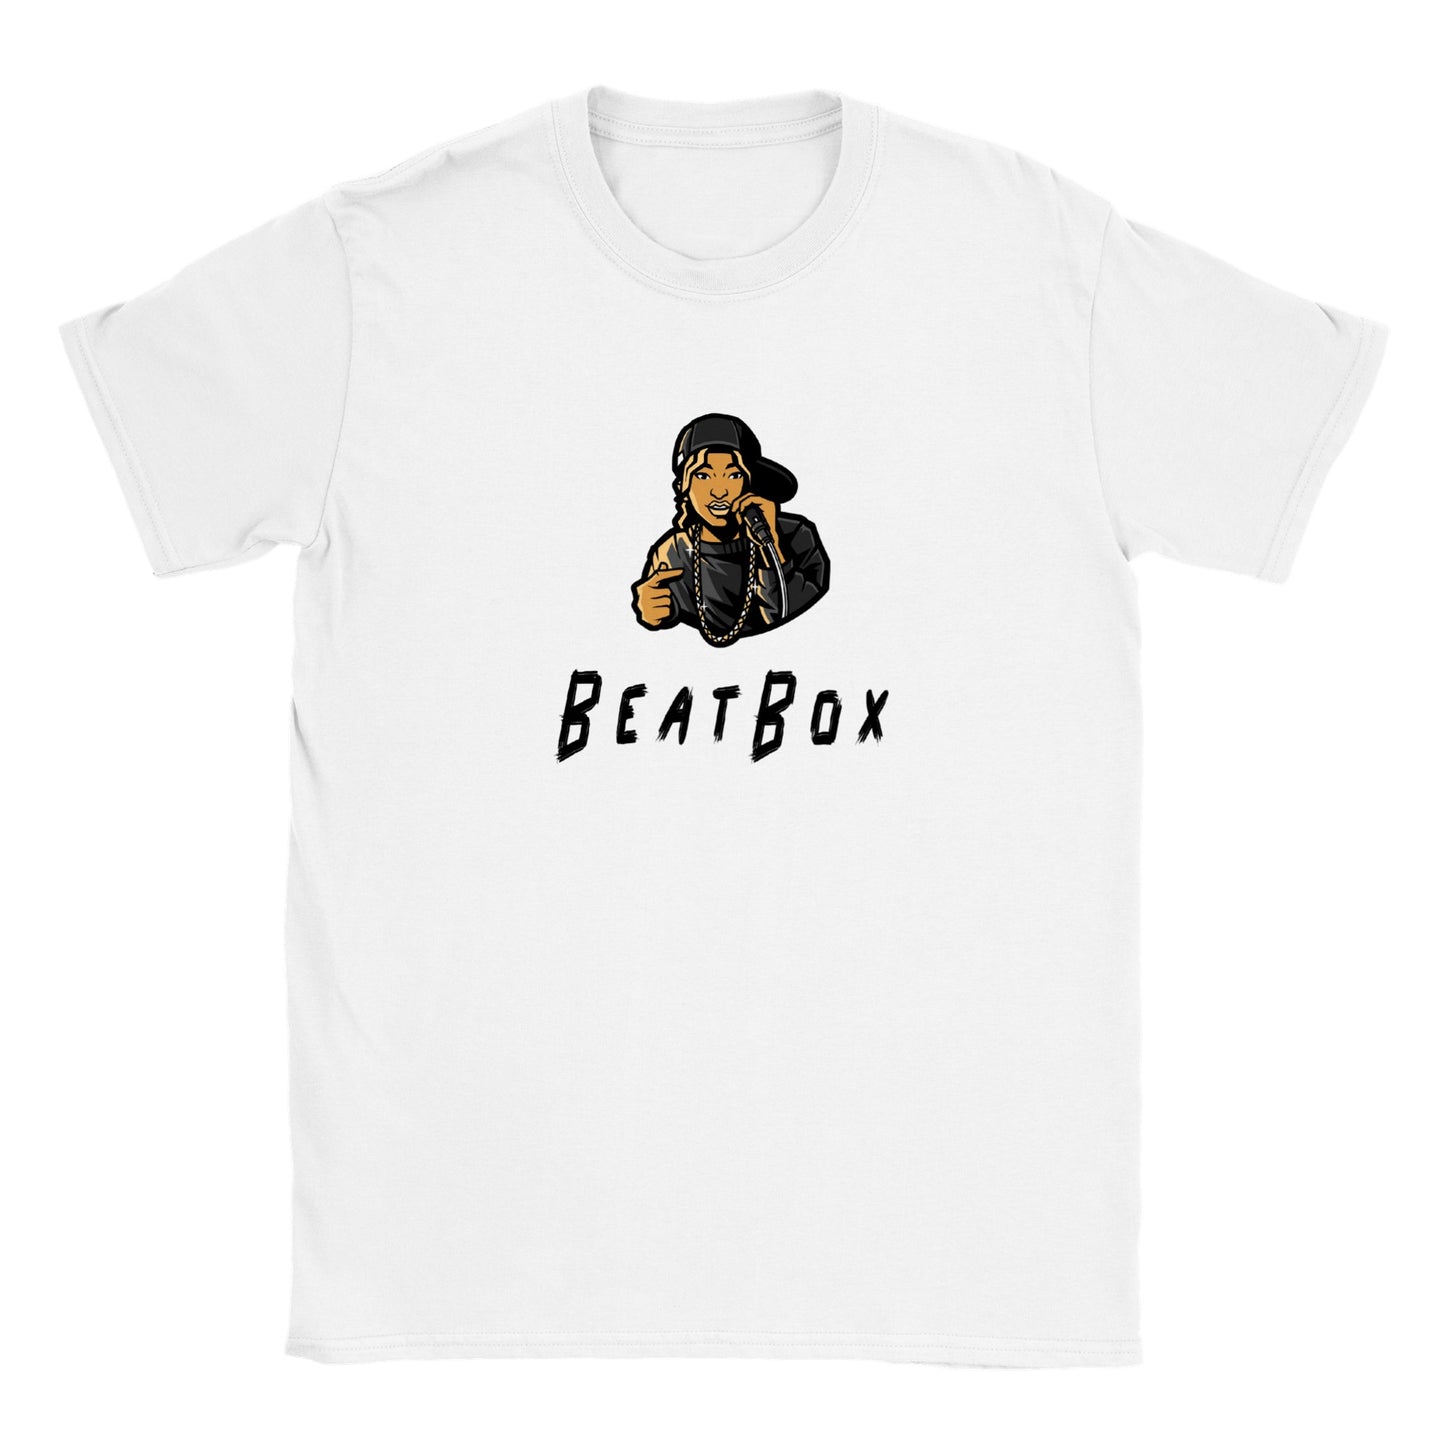 Streetwear clothing  t-shirt dress hood street- beat box